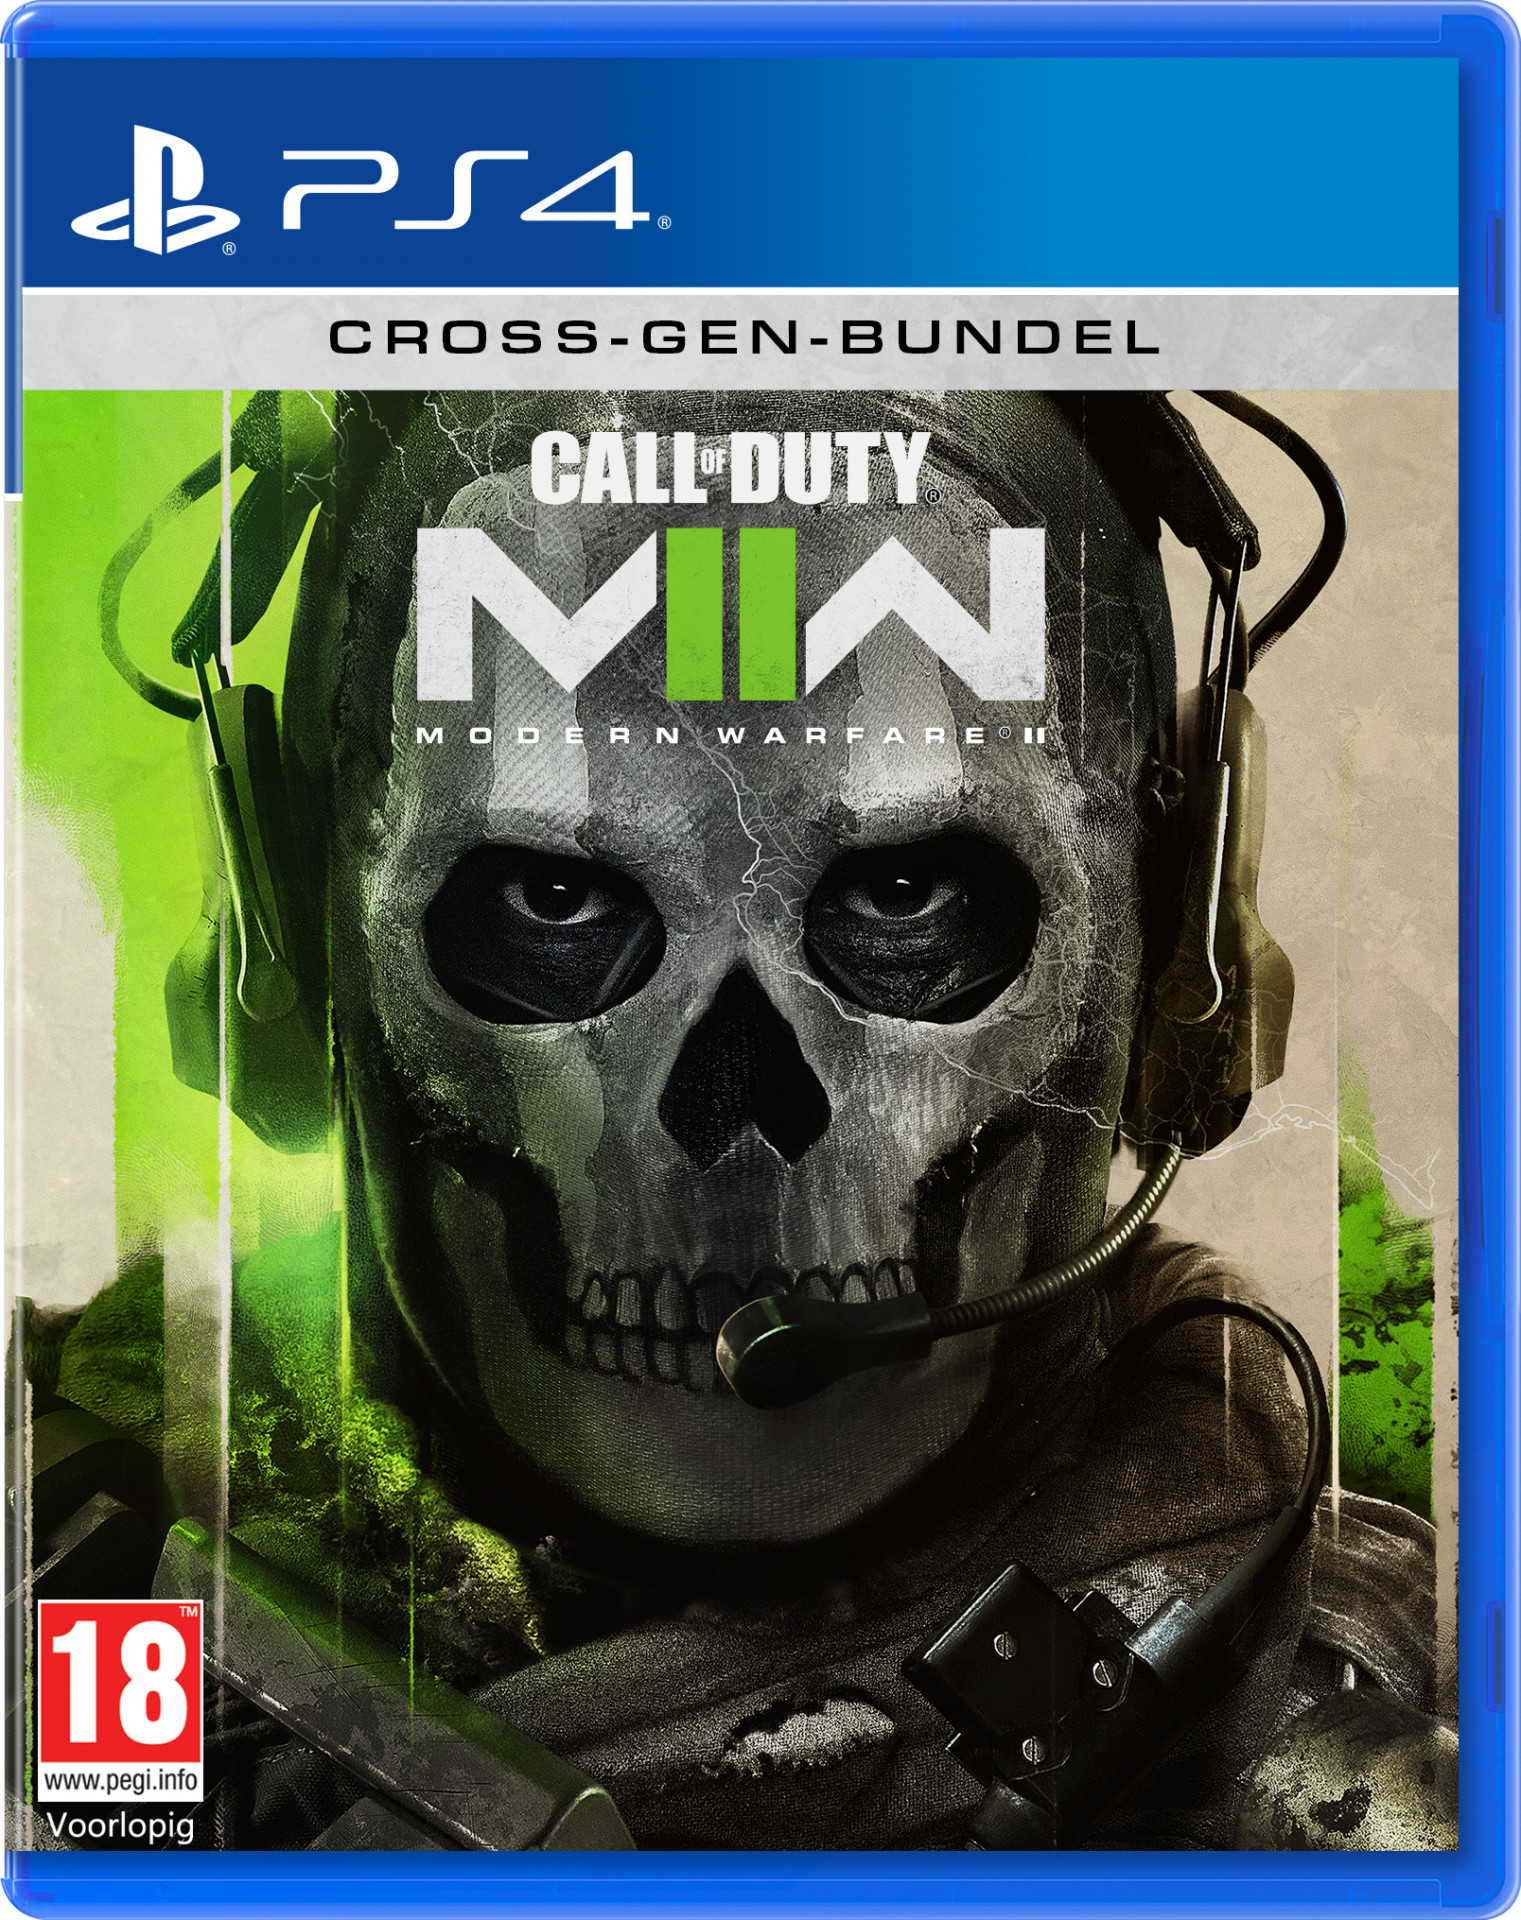 Nedgame gameshop: Call of Duty Modern Warfare (PlayStation 4) kopen - aanbieding!